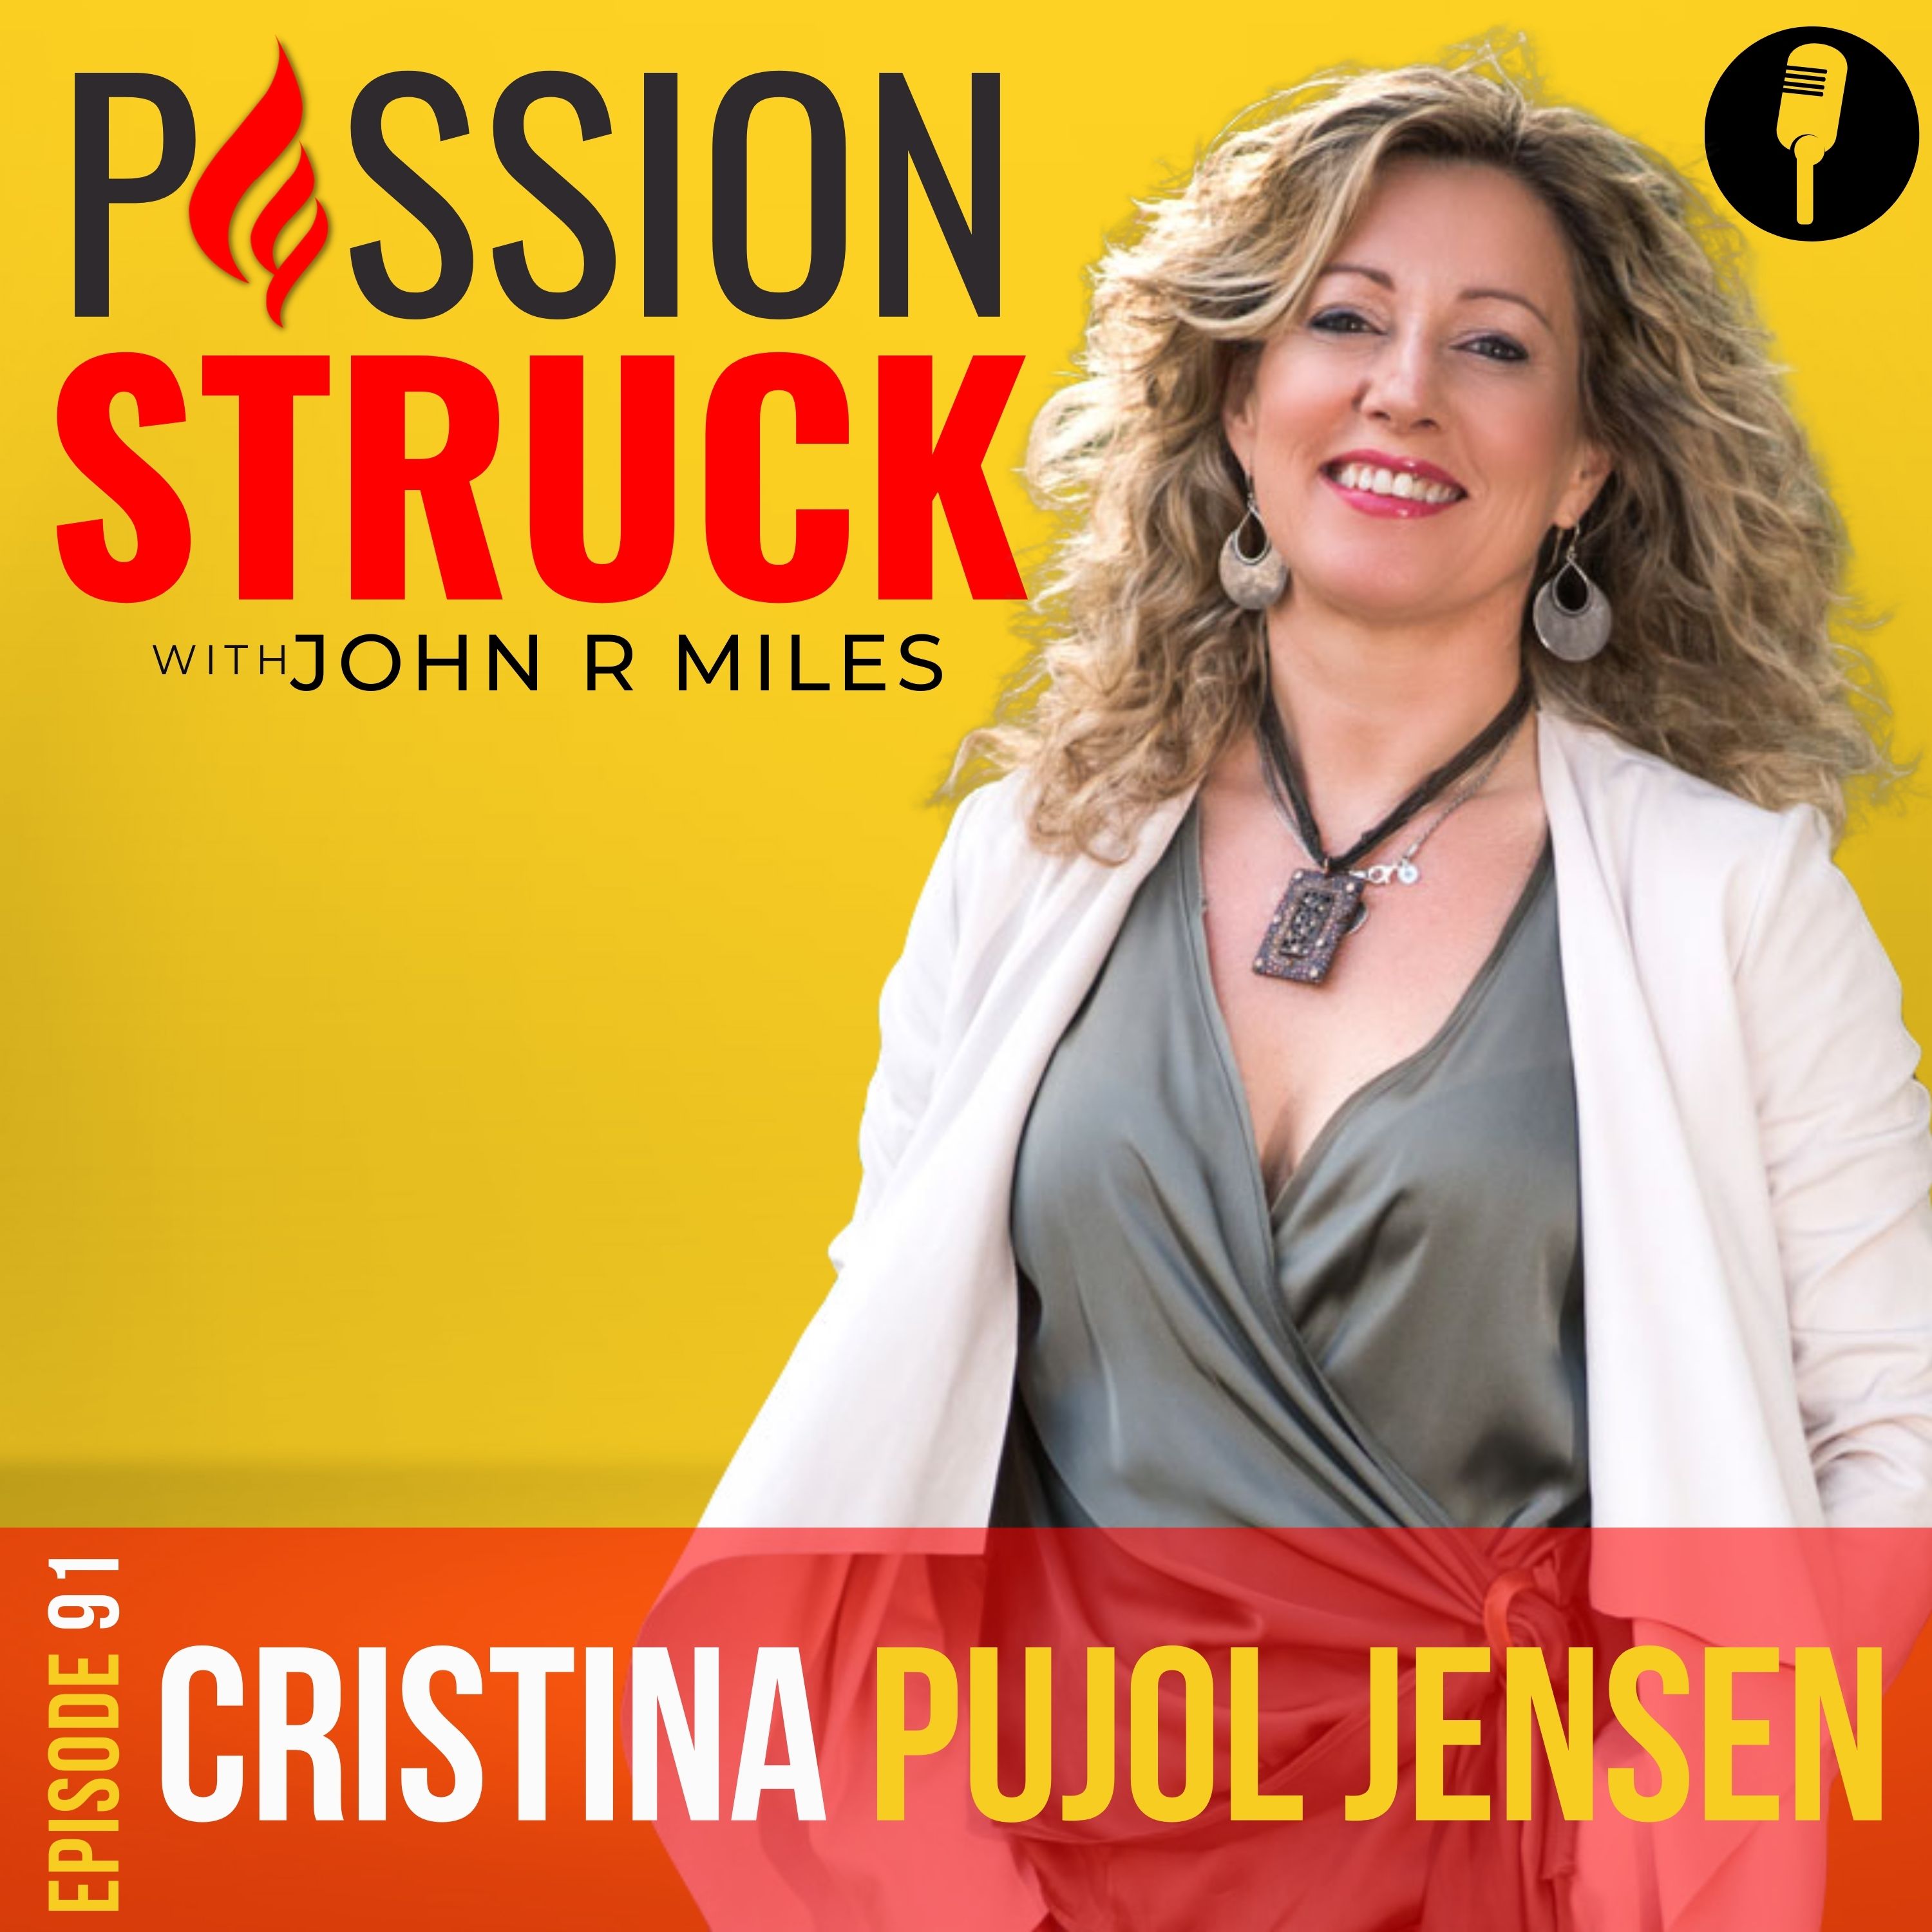 Passion Struck podcast cover with Cristina Pujol Jensen